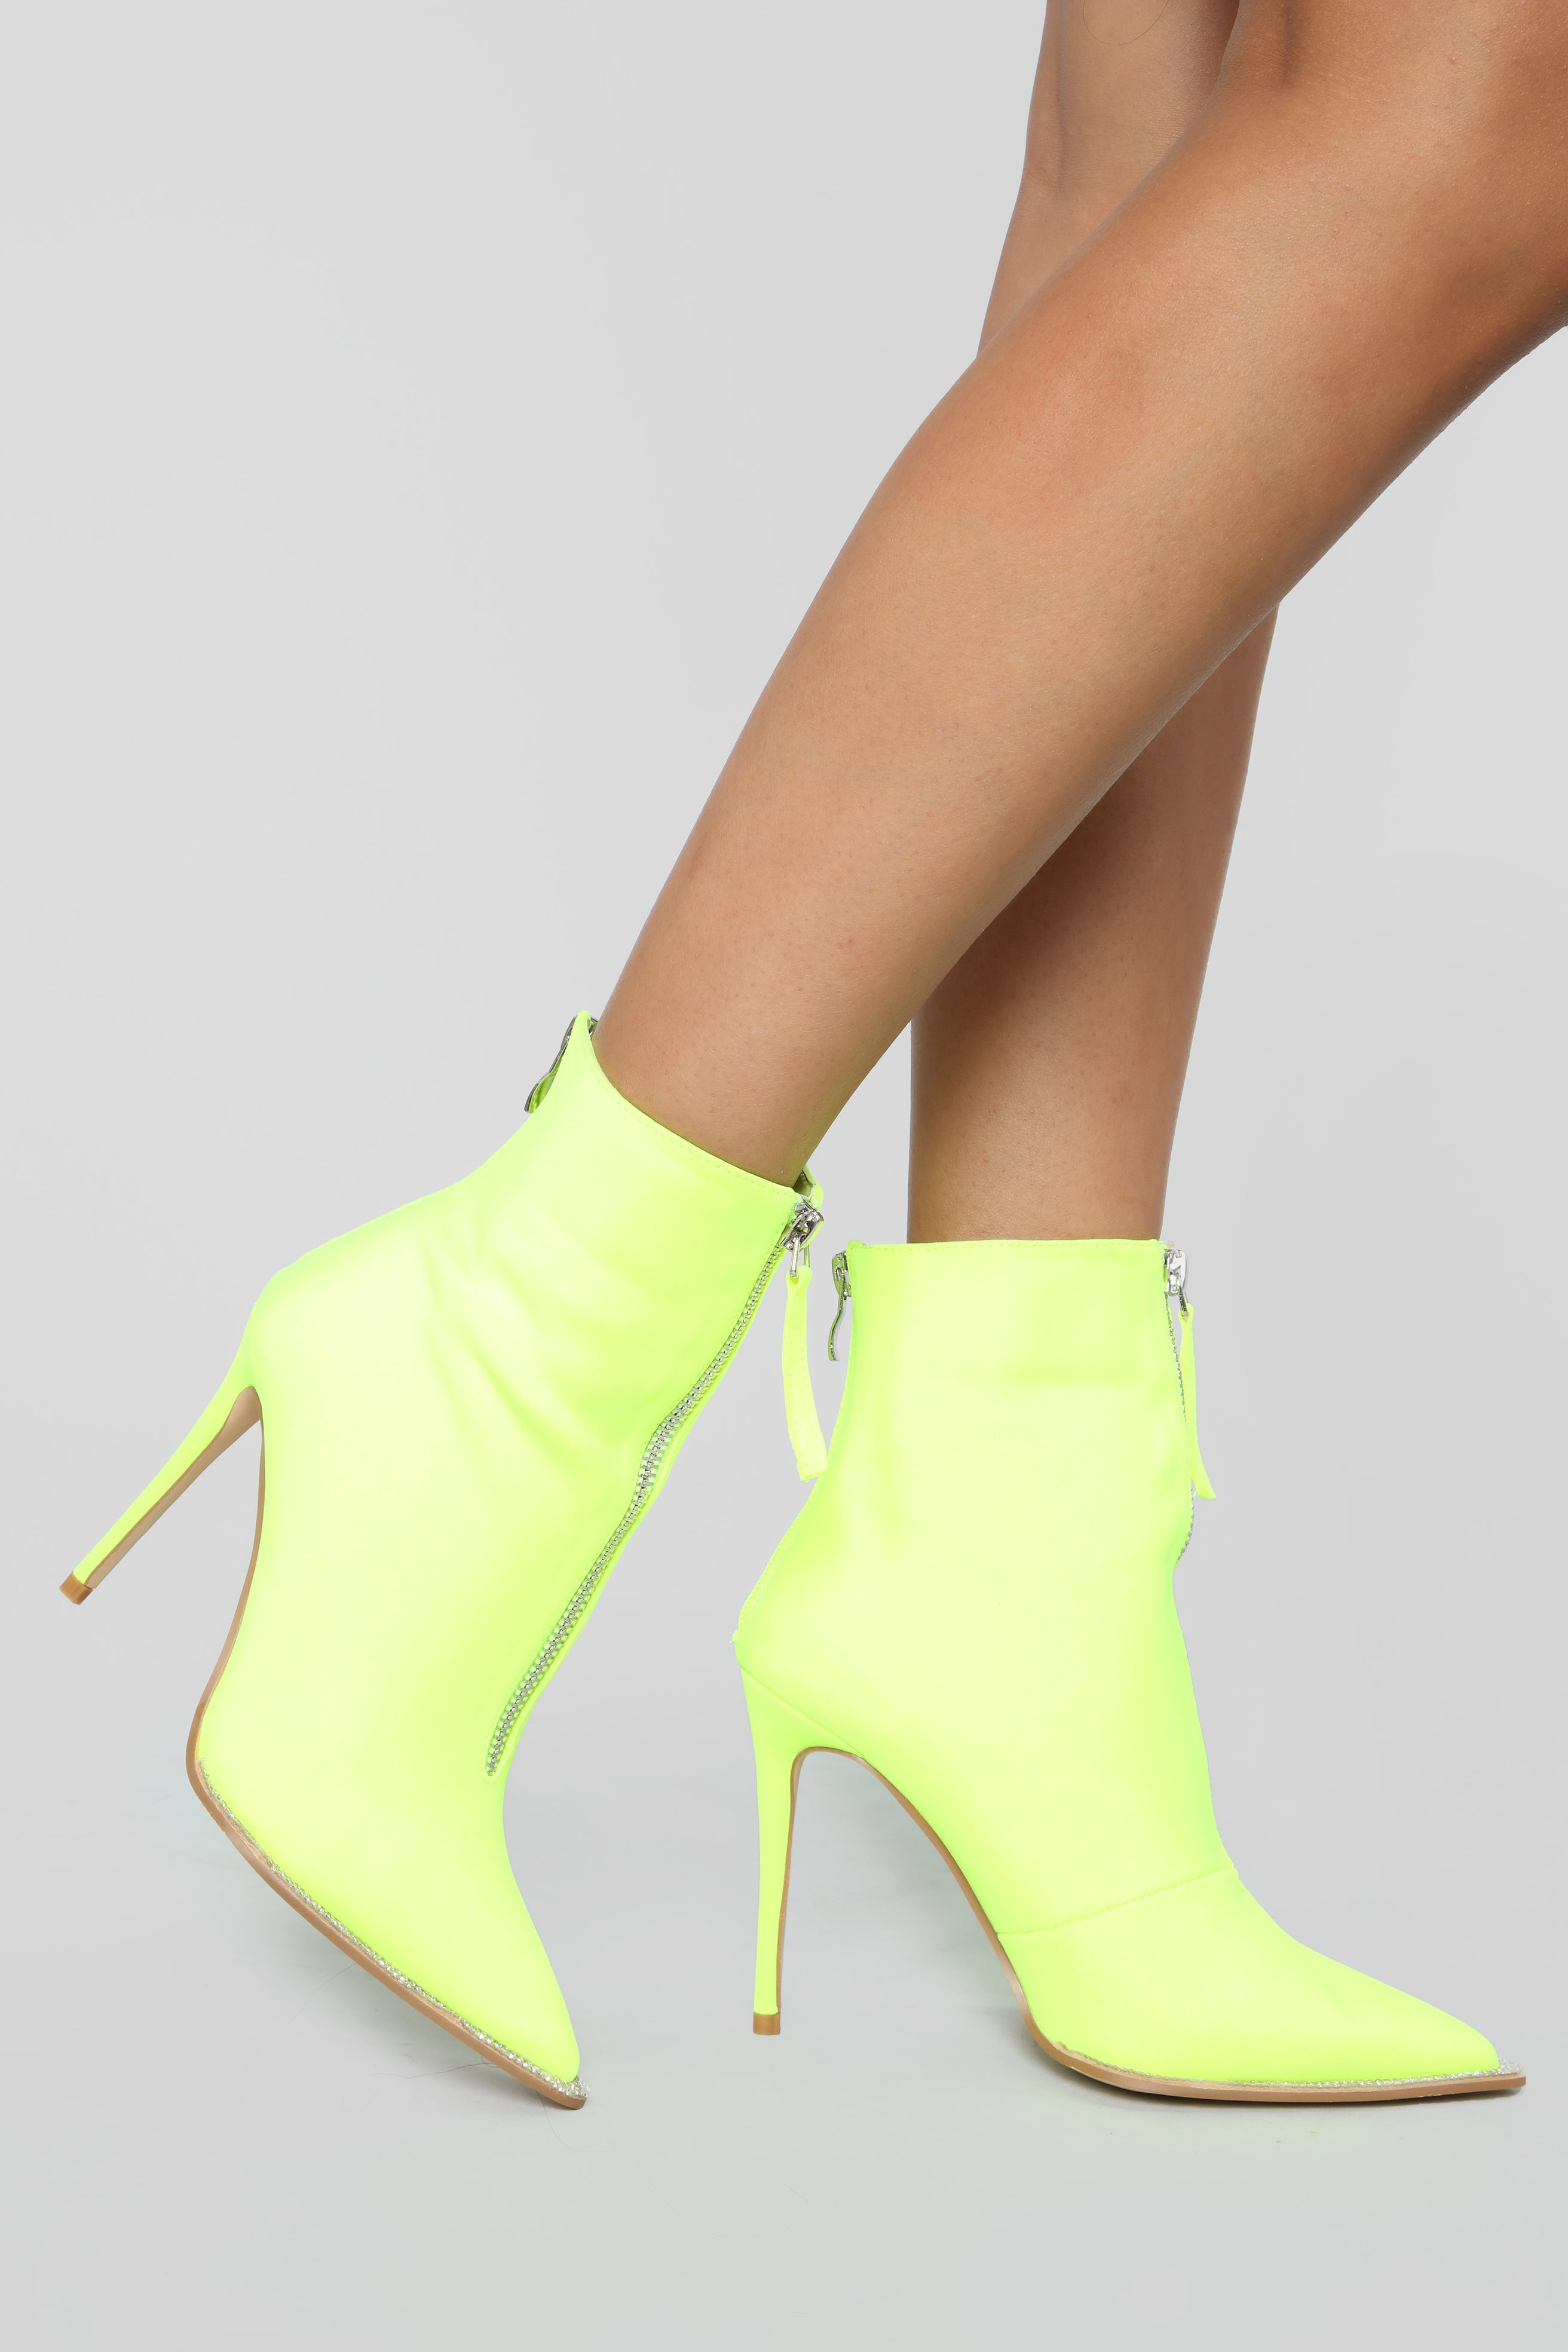 lime green boot heels